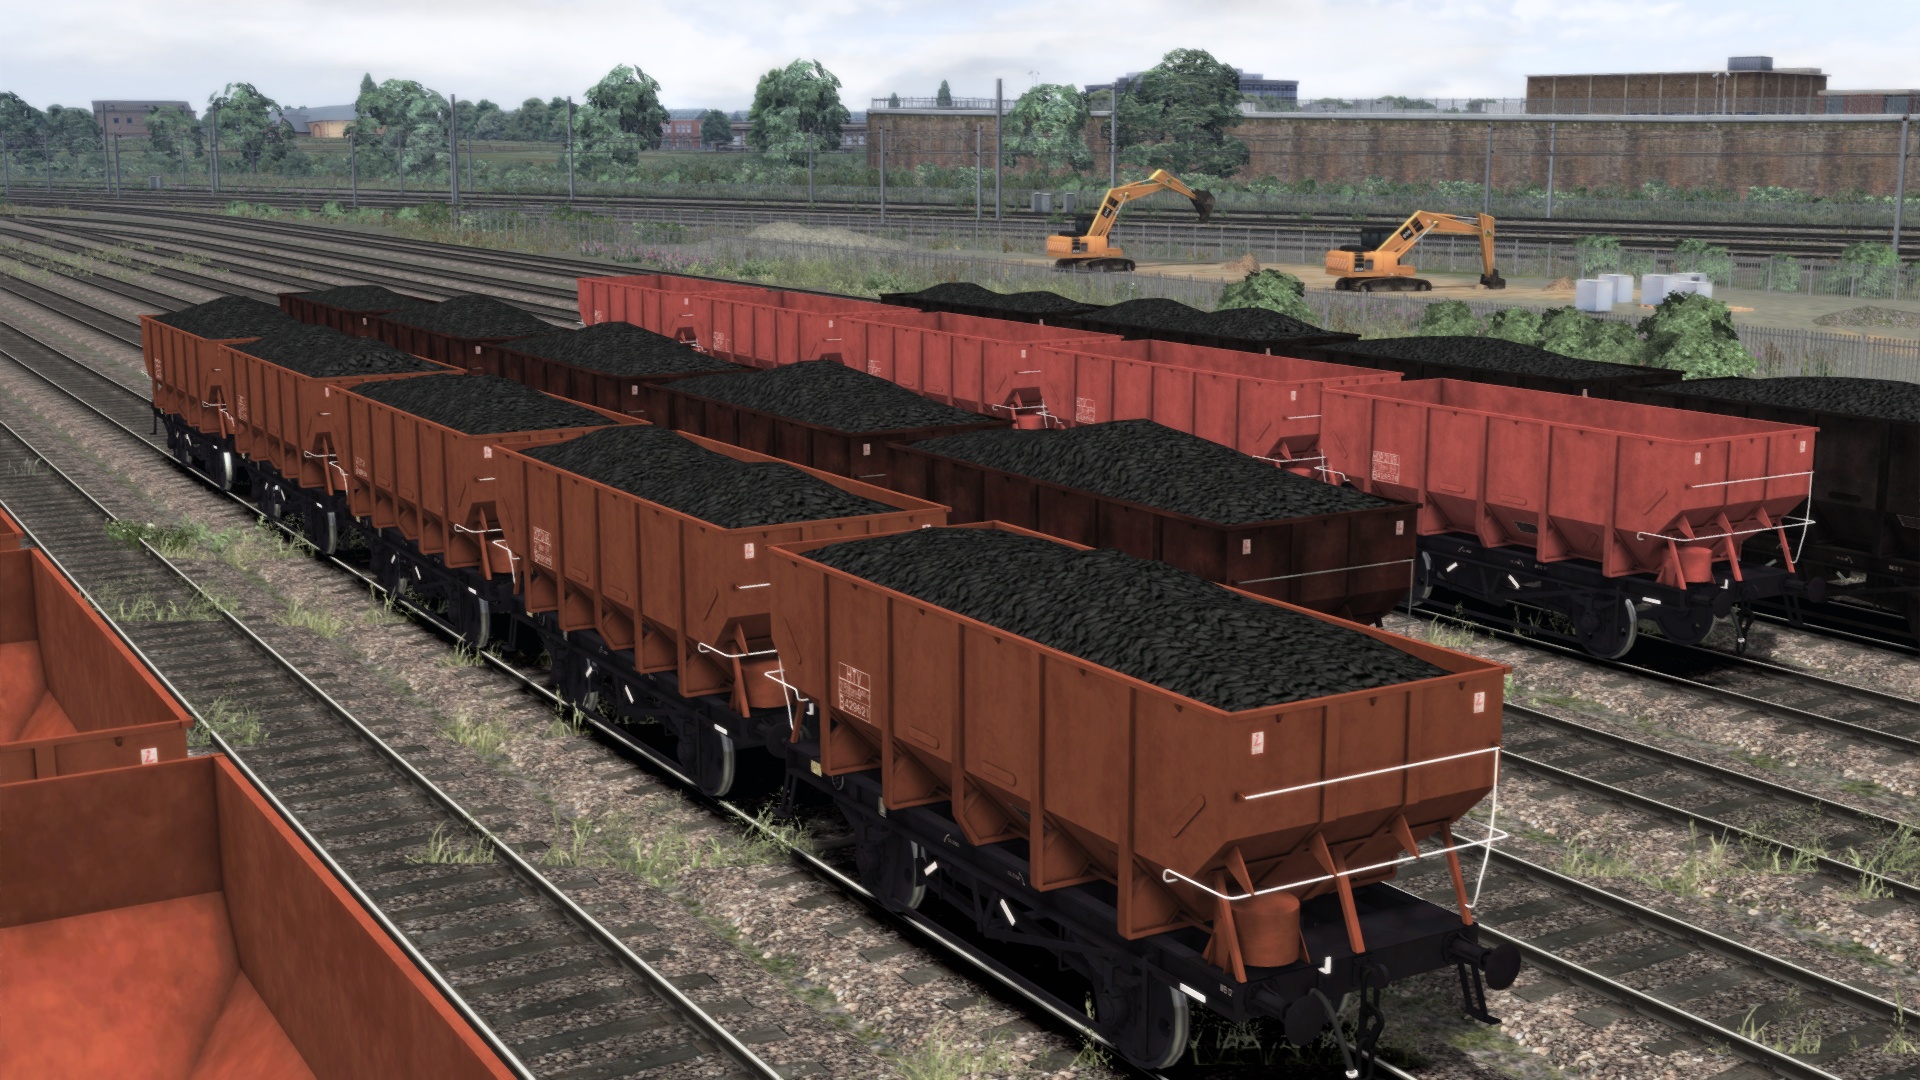 TS Marketplace: dia. 1/146 HTV 21t Coal Hopper Wagon Pack screenshot